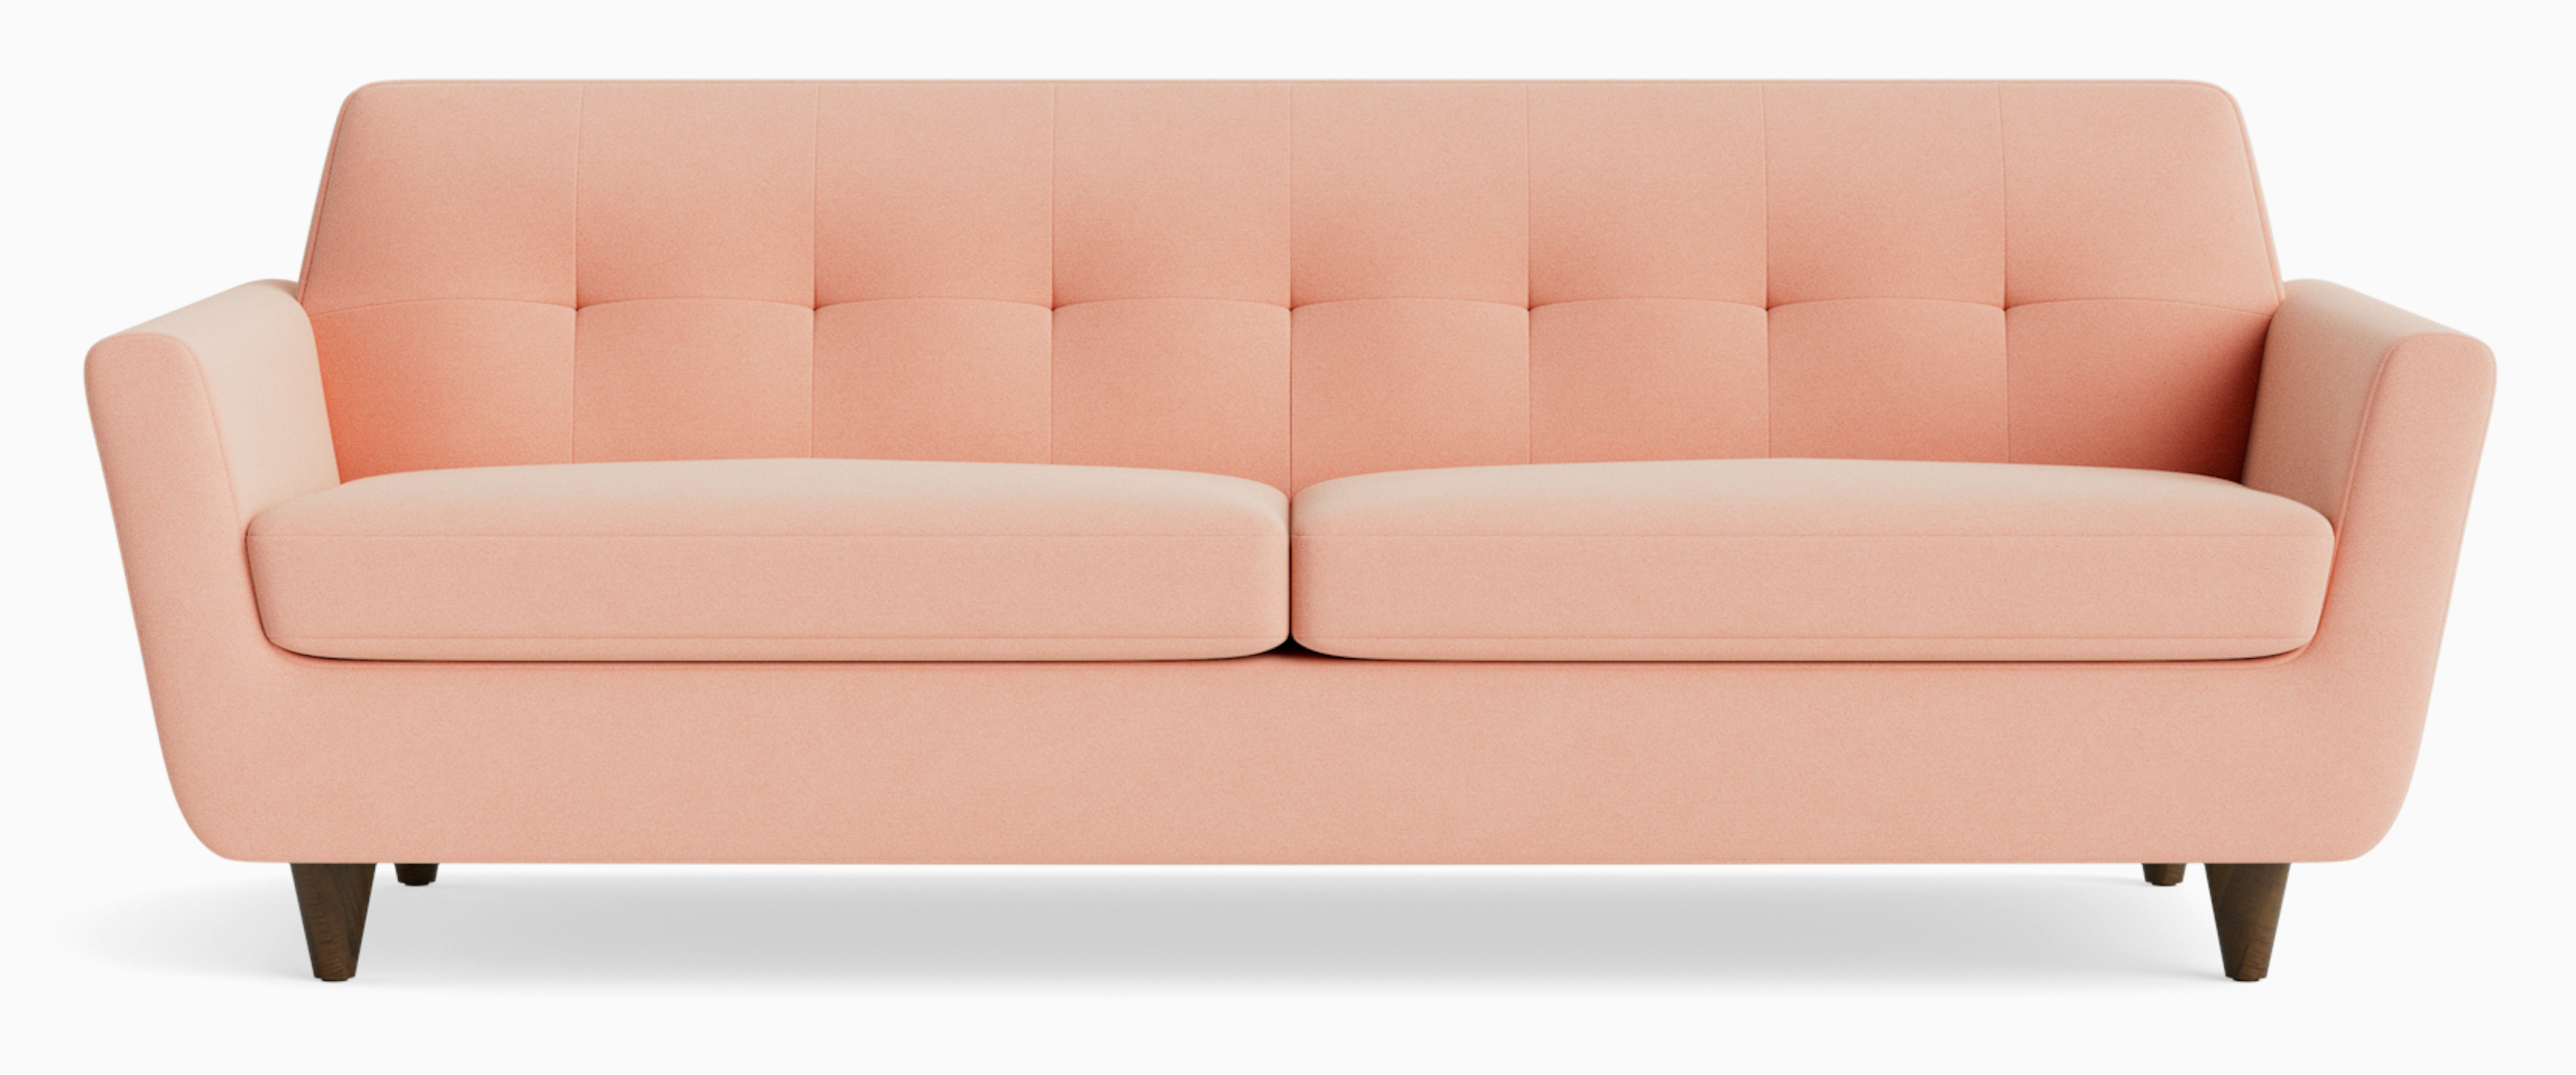 joybird sofa bed couch uncomfortable